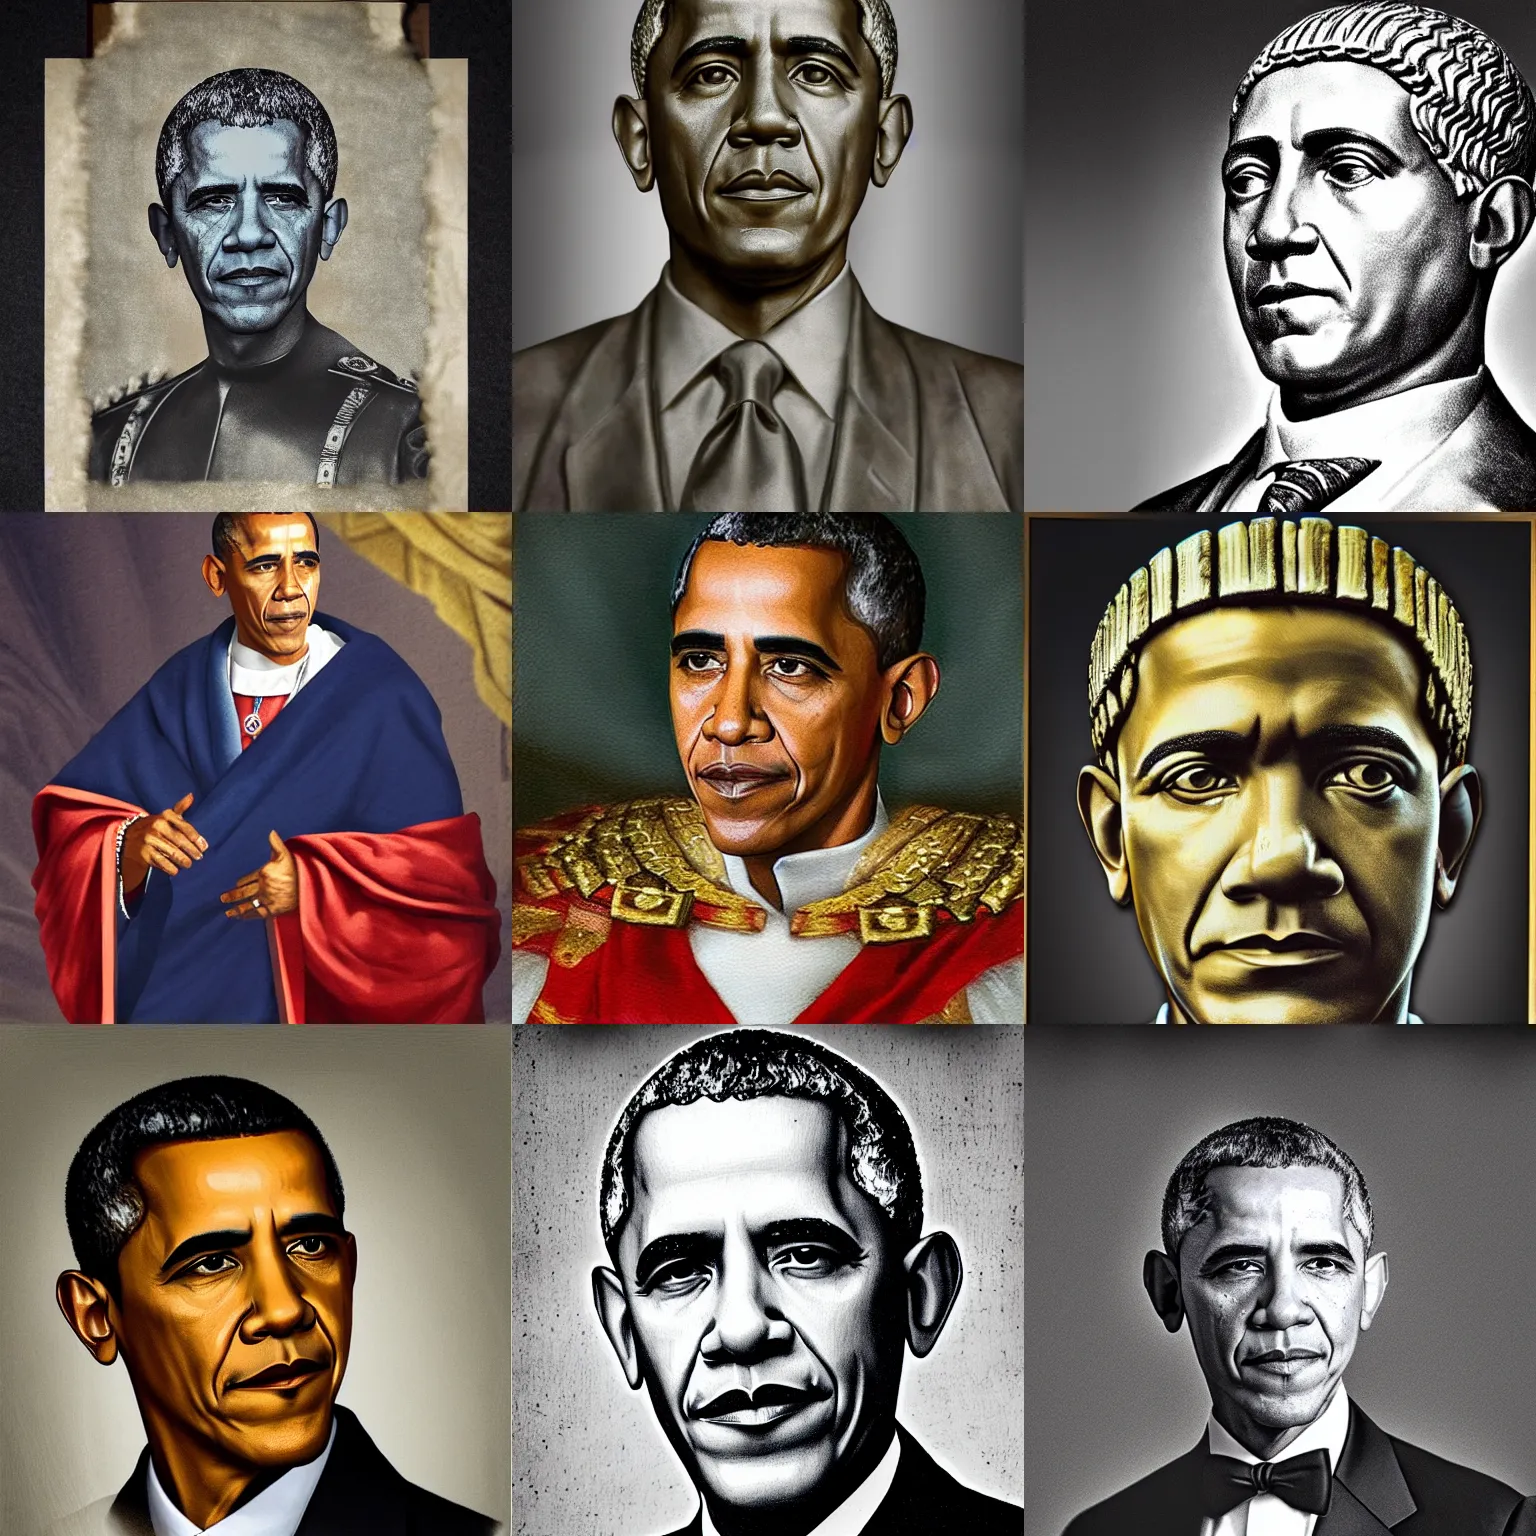 Prompt: portrait photo of obama in the style of roman emperor caesar